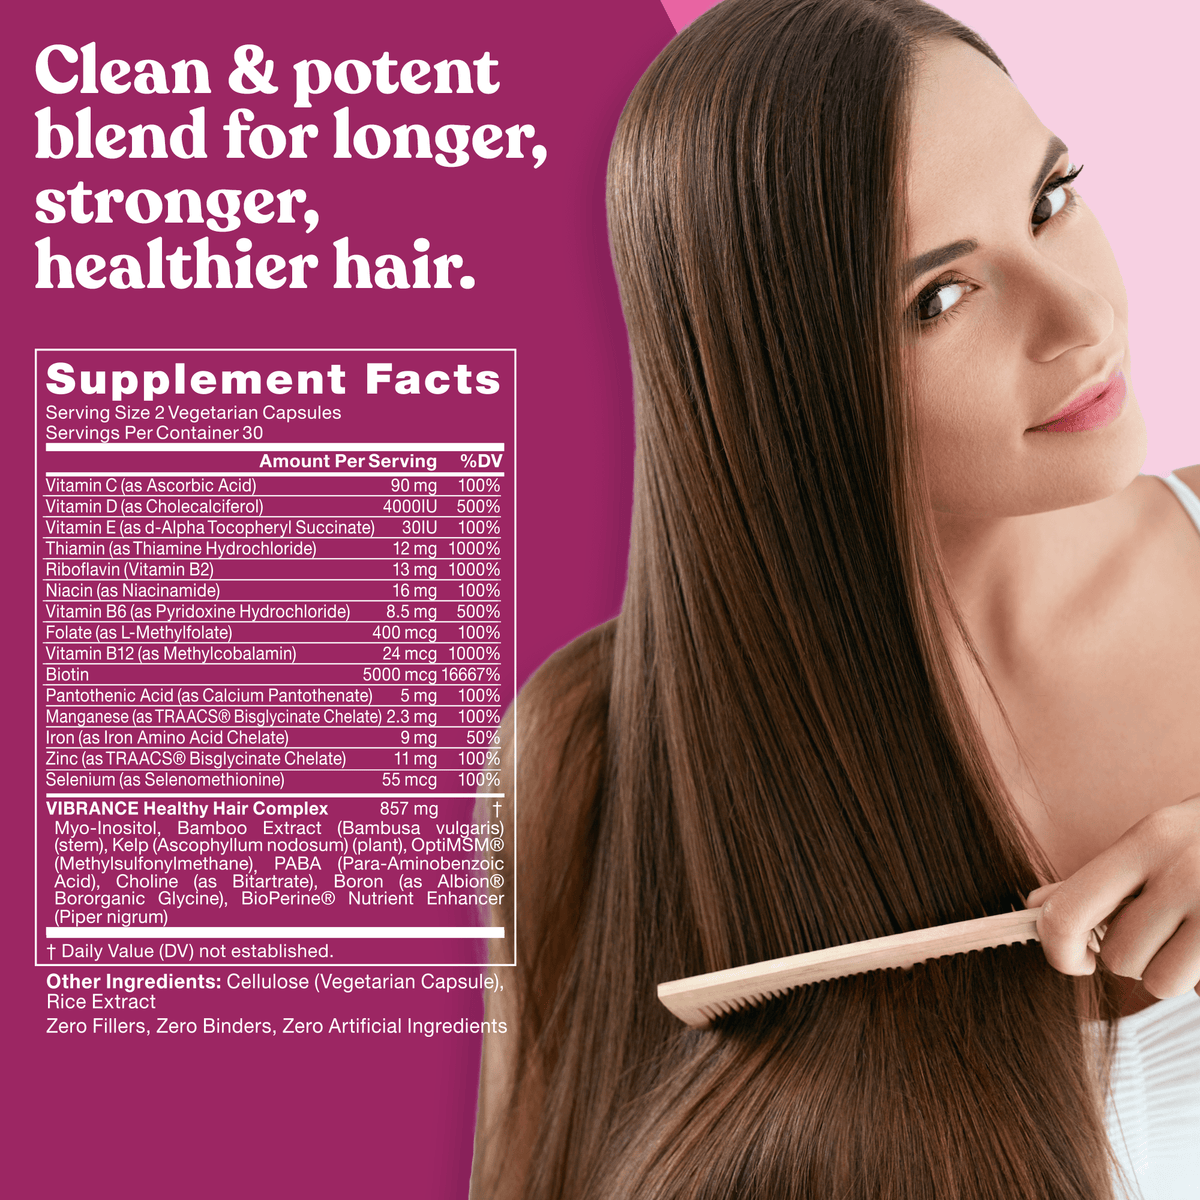 Eu Natural VIBRANCE Healthy Hair Vitamins (3 Pack)